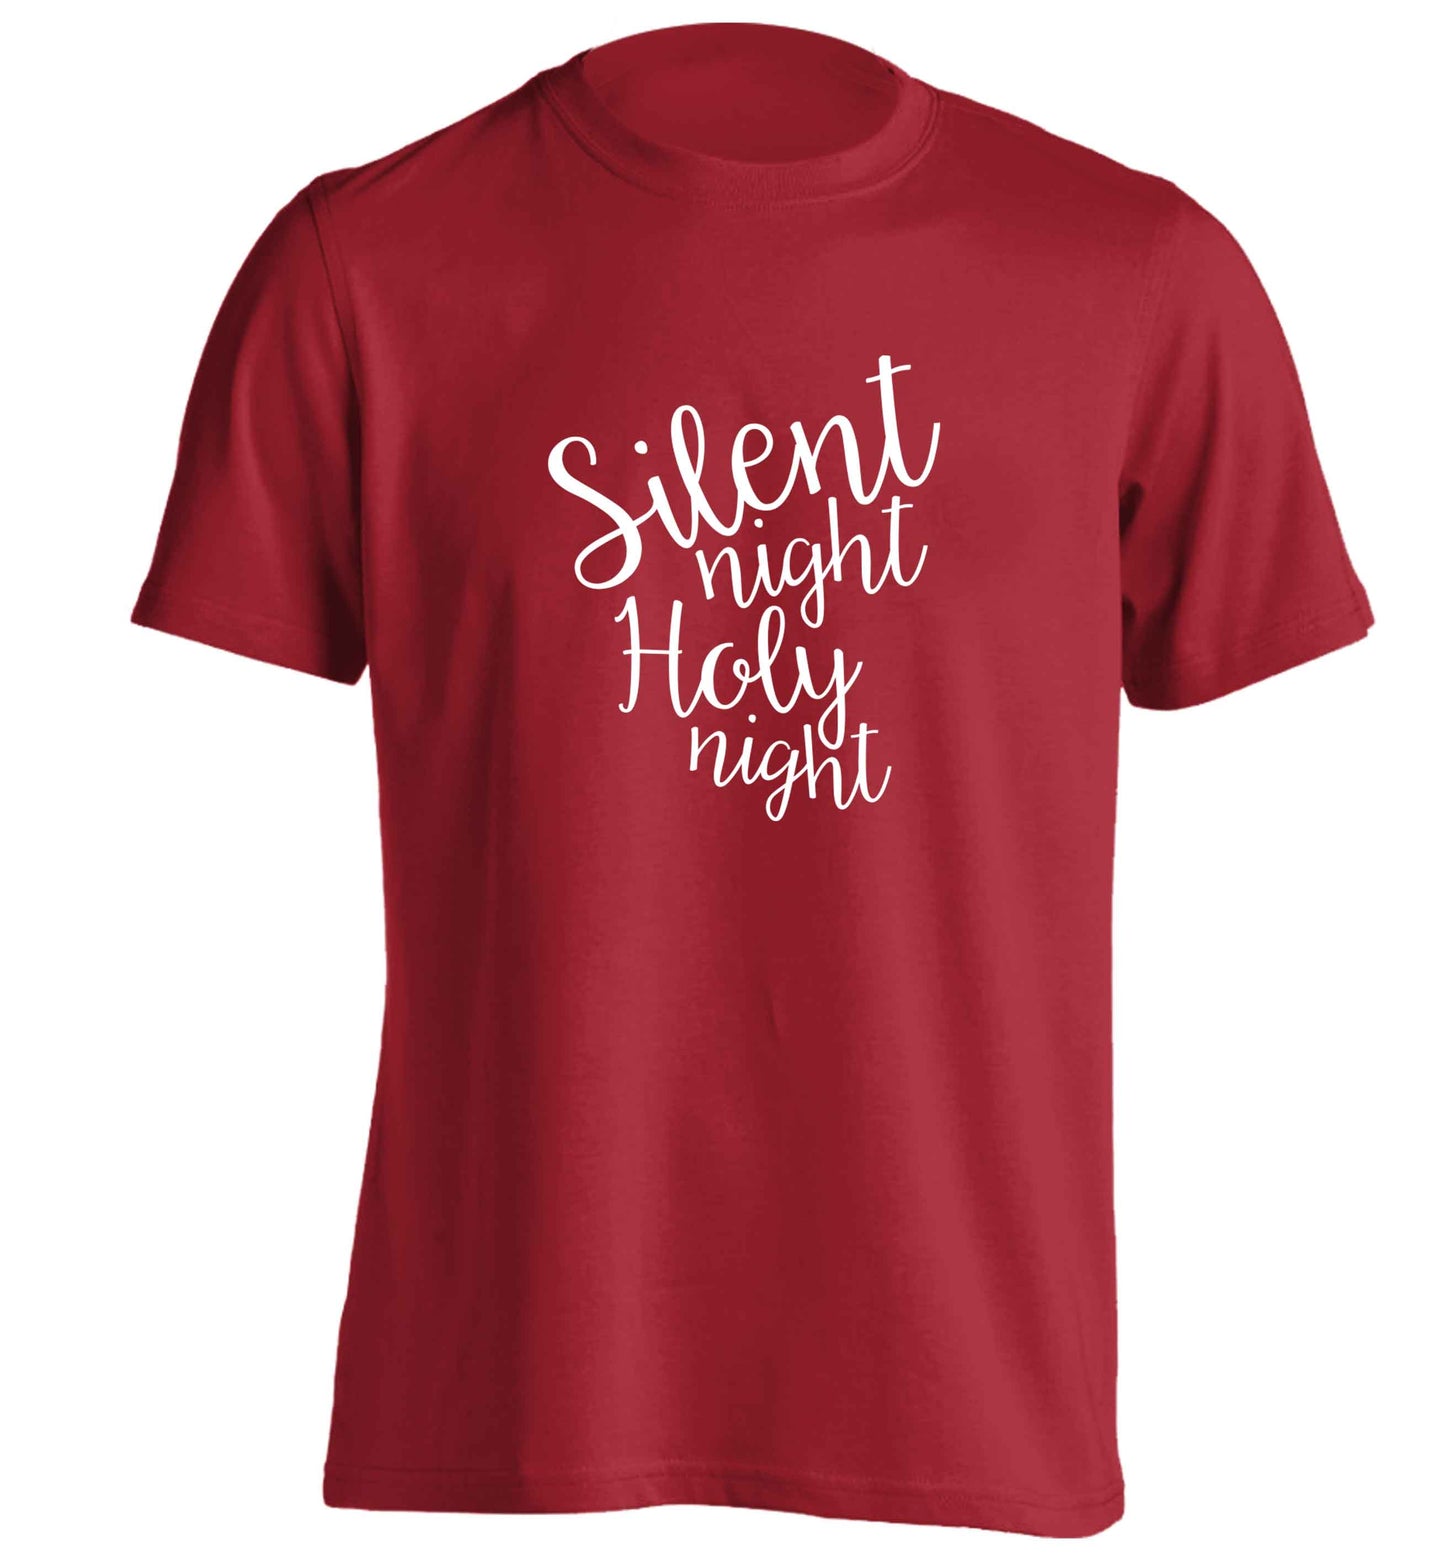 Silent night holy night adults unisex red Tshirt 2XL